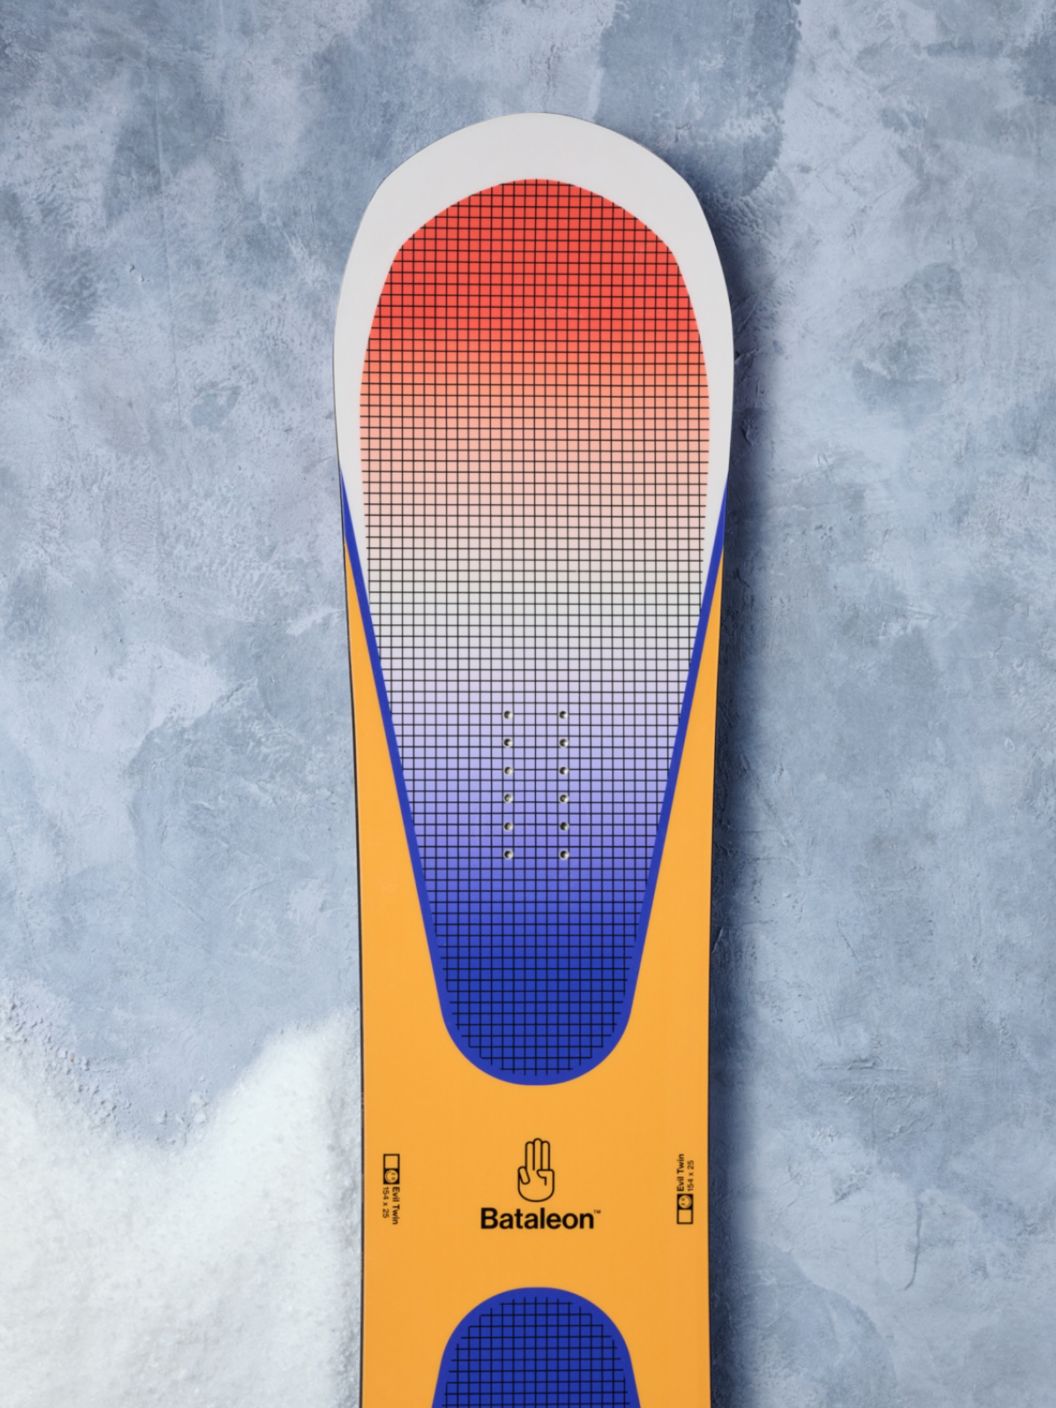 The Bataleon Evil Twin snowboard. 